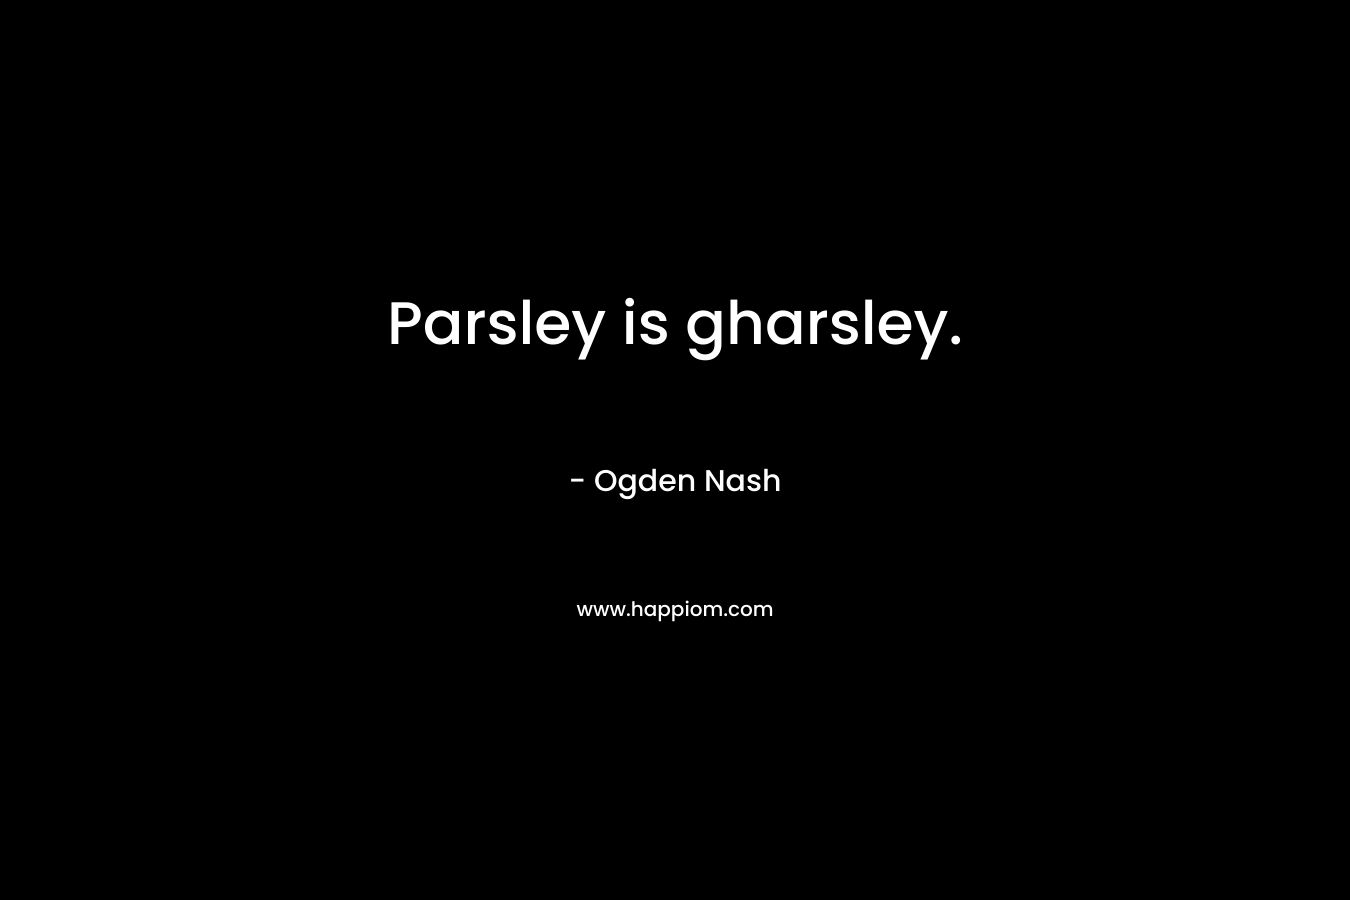 Parsley is gharsley. – Ogden Nash